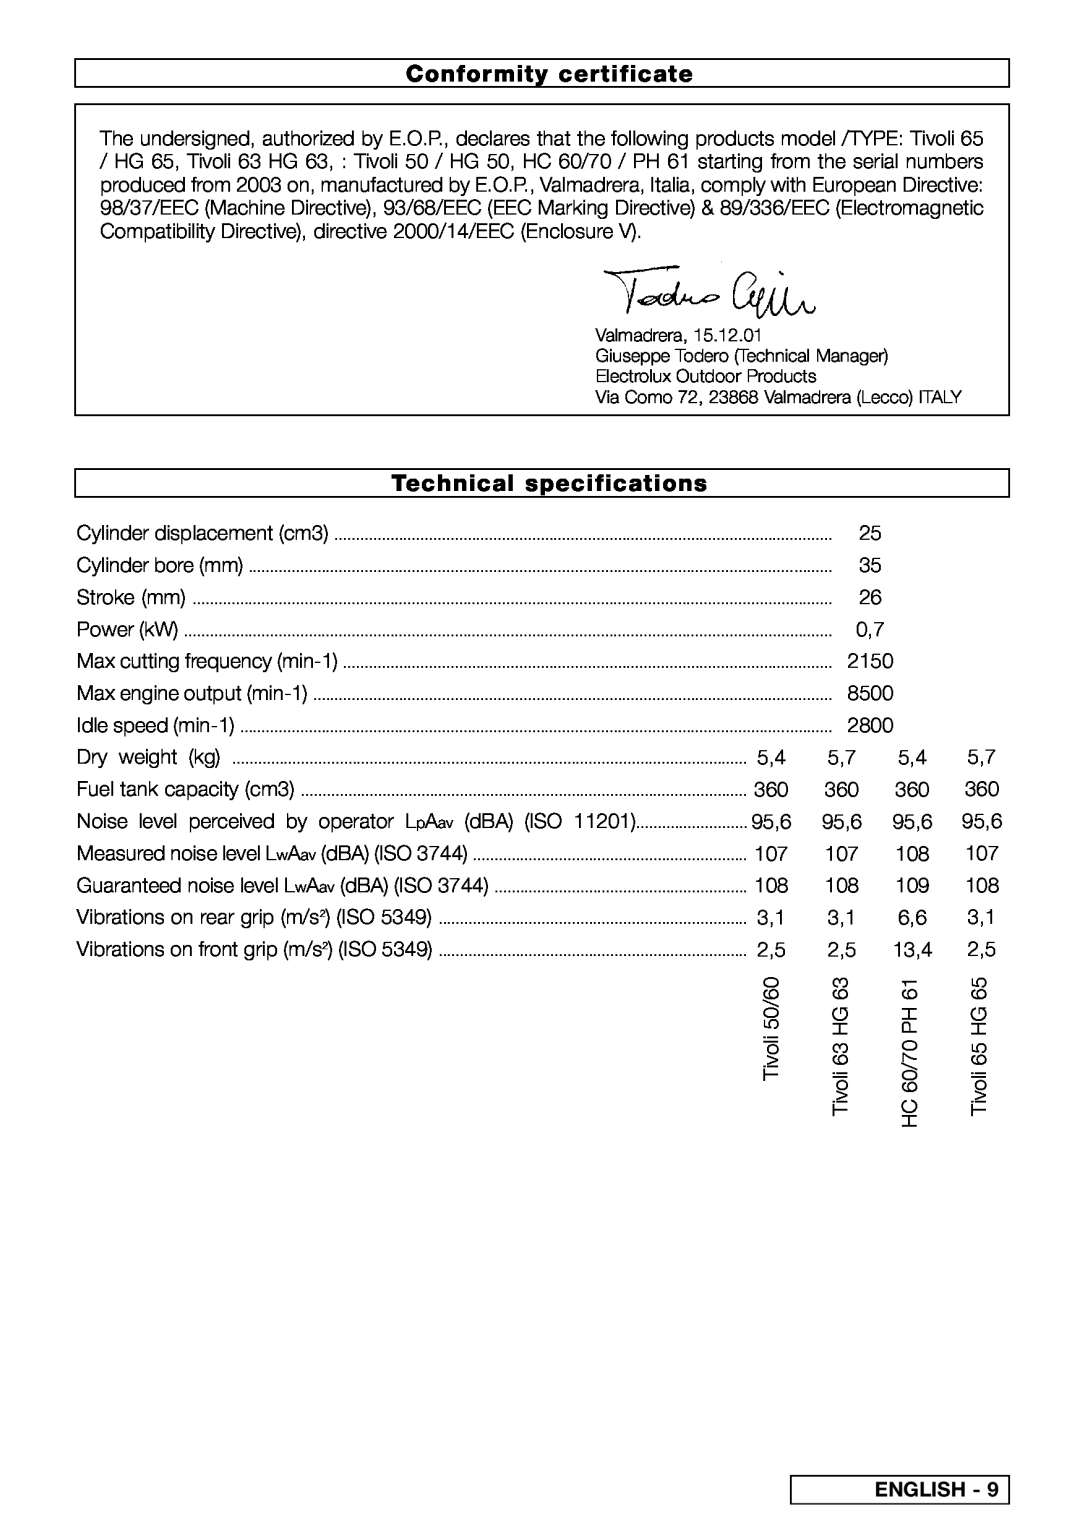 Electrolux TIVTIVOLI 50 / HG 50OLI 50 / HG 50 manual Conformity certificate, Technical specifications 